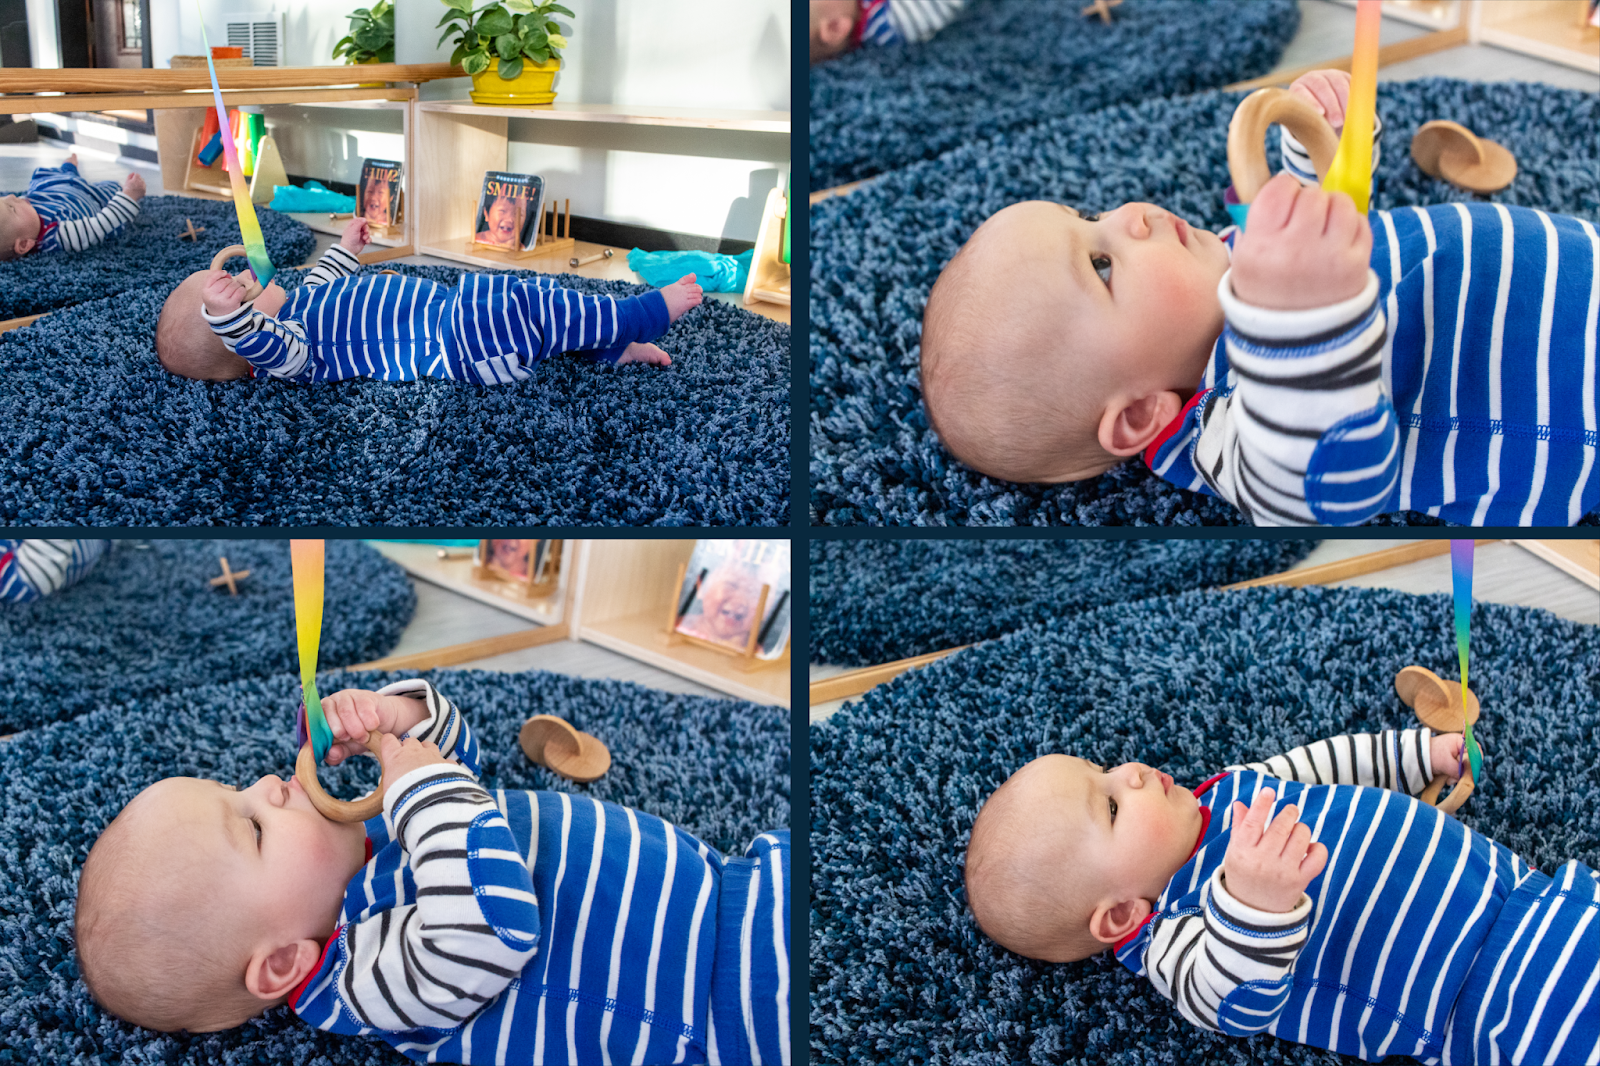 Montessori Newborn Infant Toys Holzobjekt Fitting Übung Hand Ergriffen 